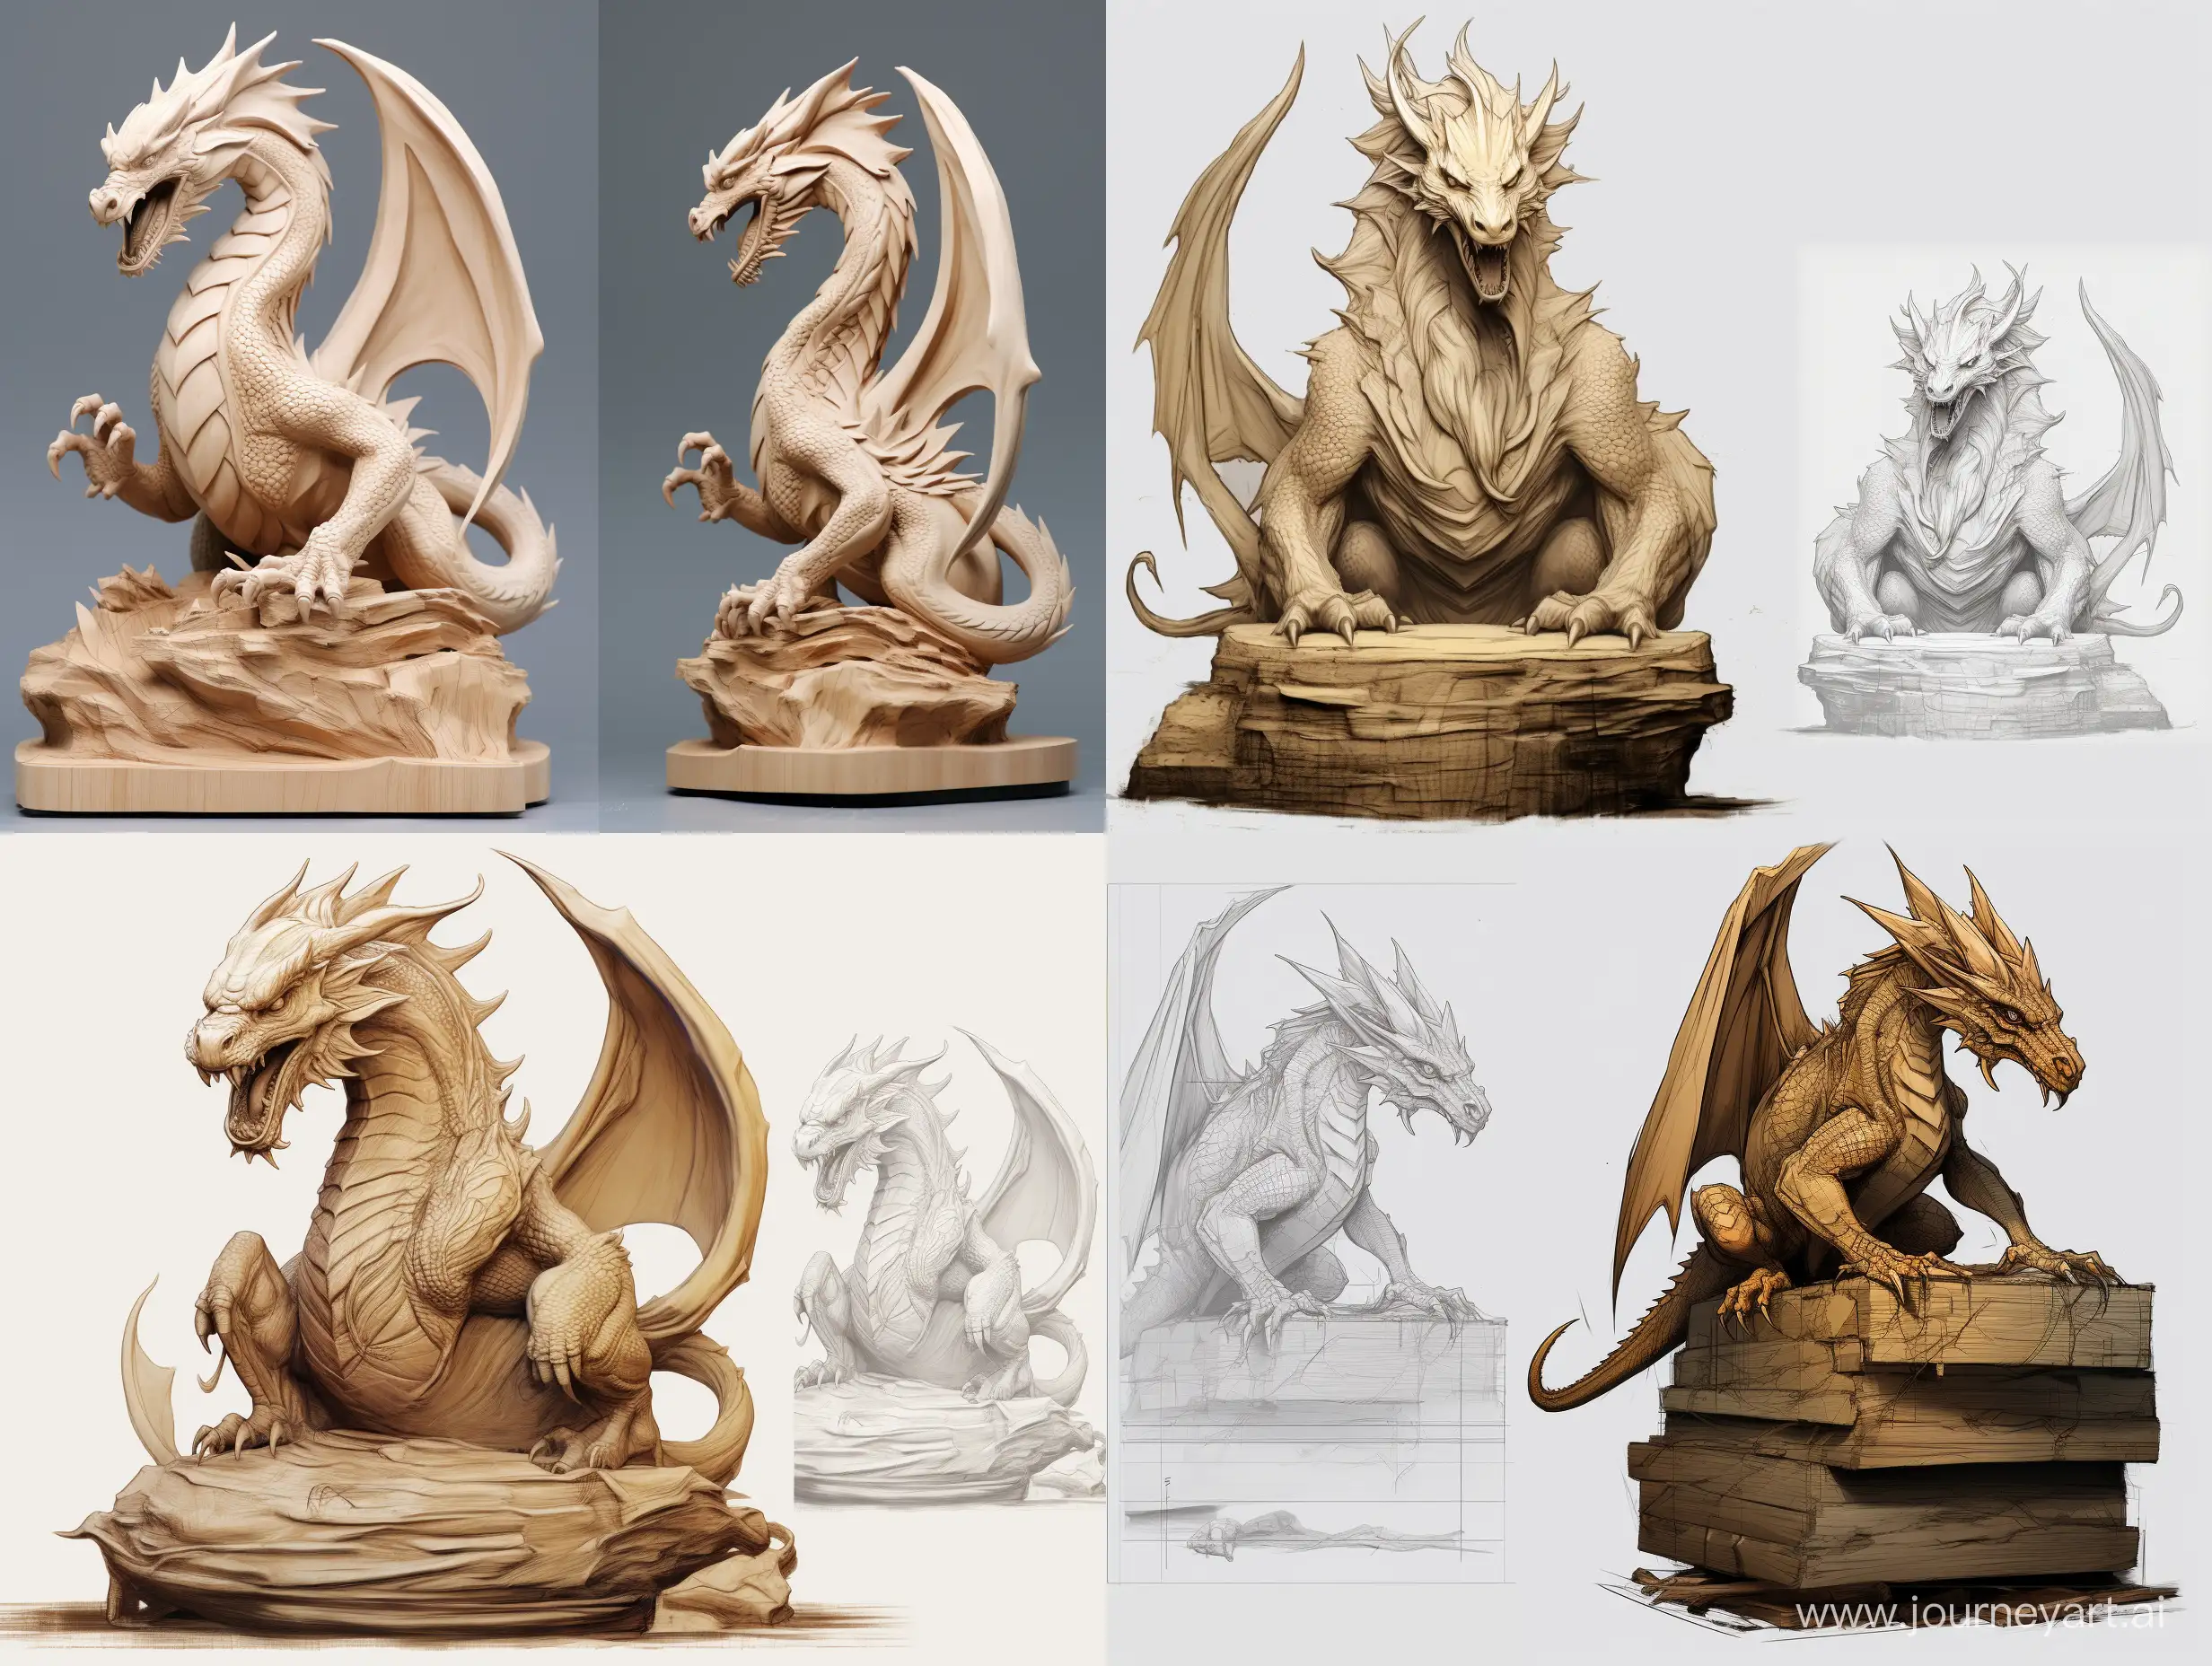 Majestic-Wooden-Dragon-Sculpture-in-Battleready-Pose-8k-Ultra-Realistic-Concept-Art